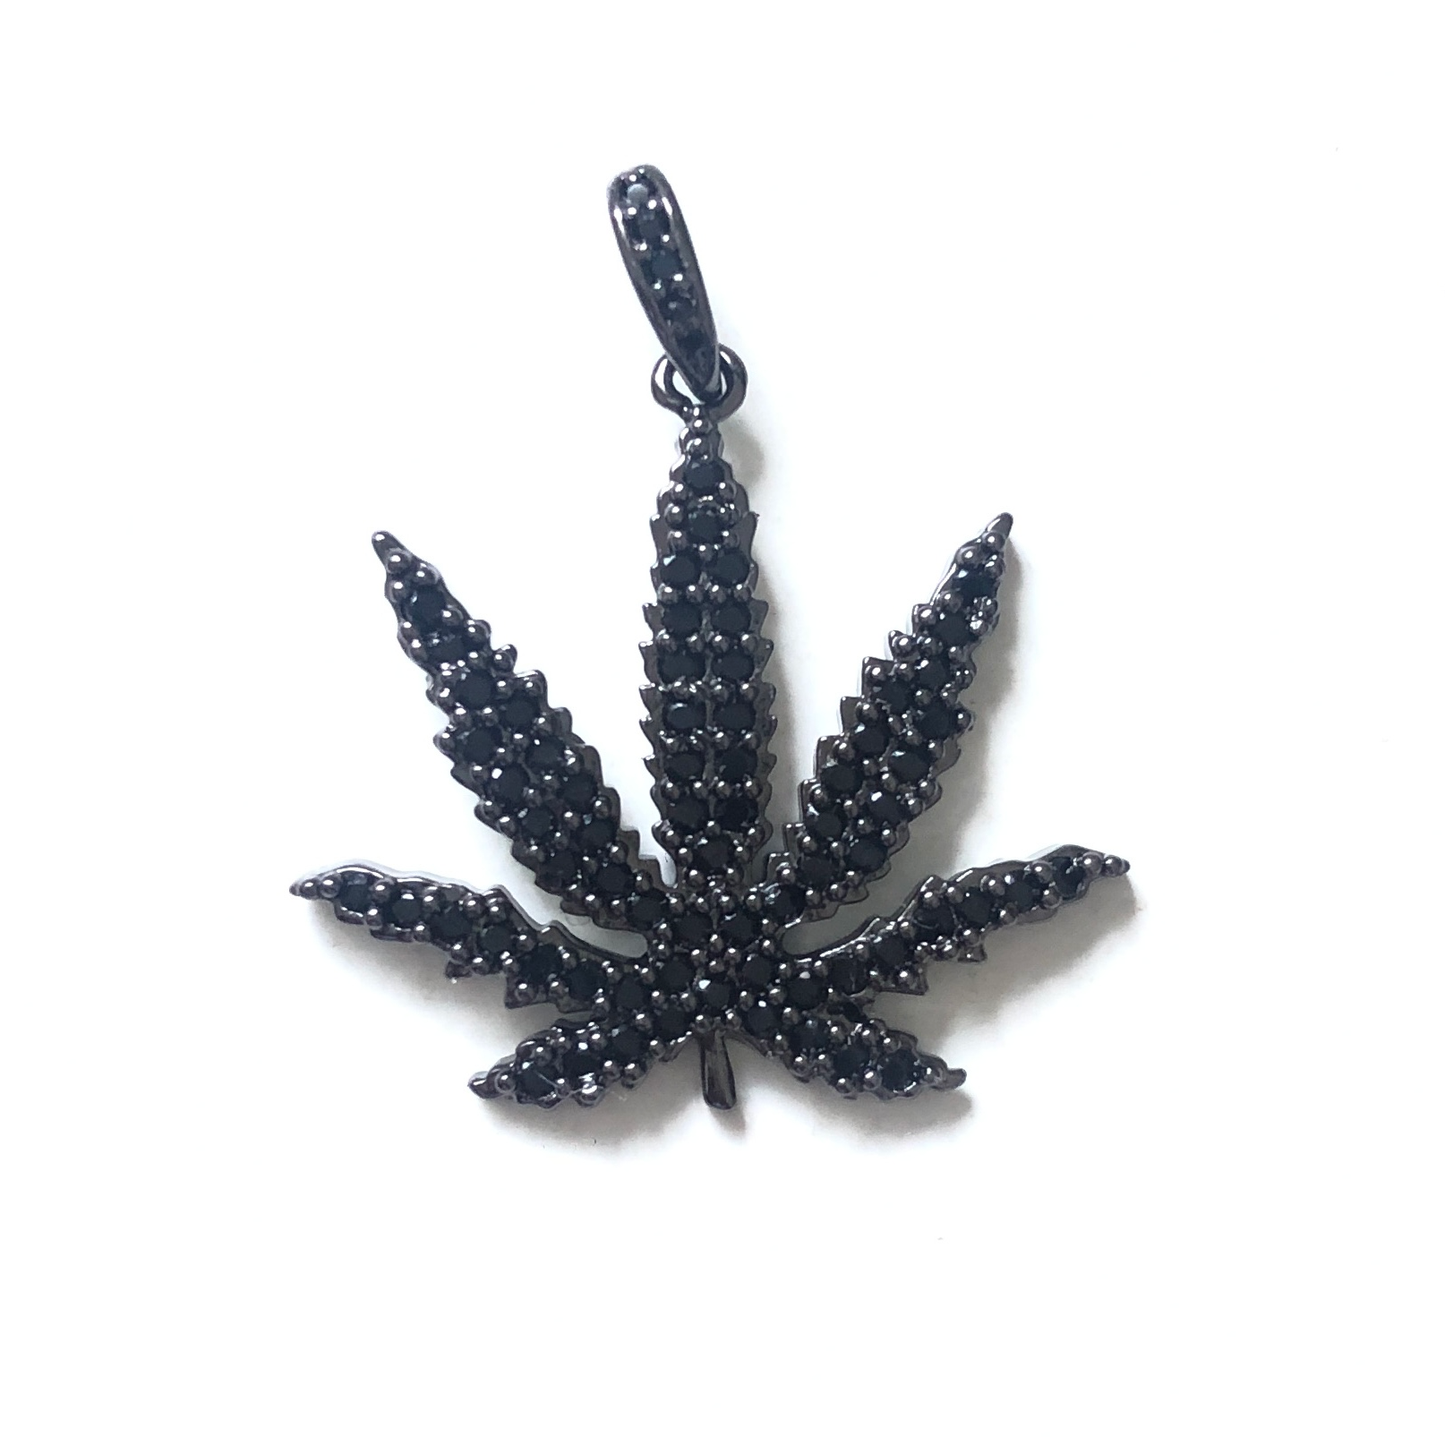 10pcs/lot 25*21.5mm CZ Paved Cannabis Leaf Plant Charms Black on Black CZ Paved Charms Flowers Charms Beads Beyond